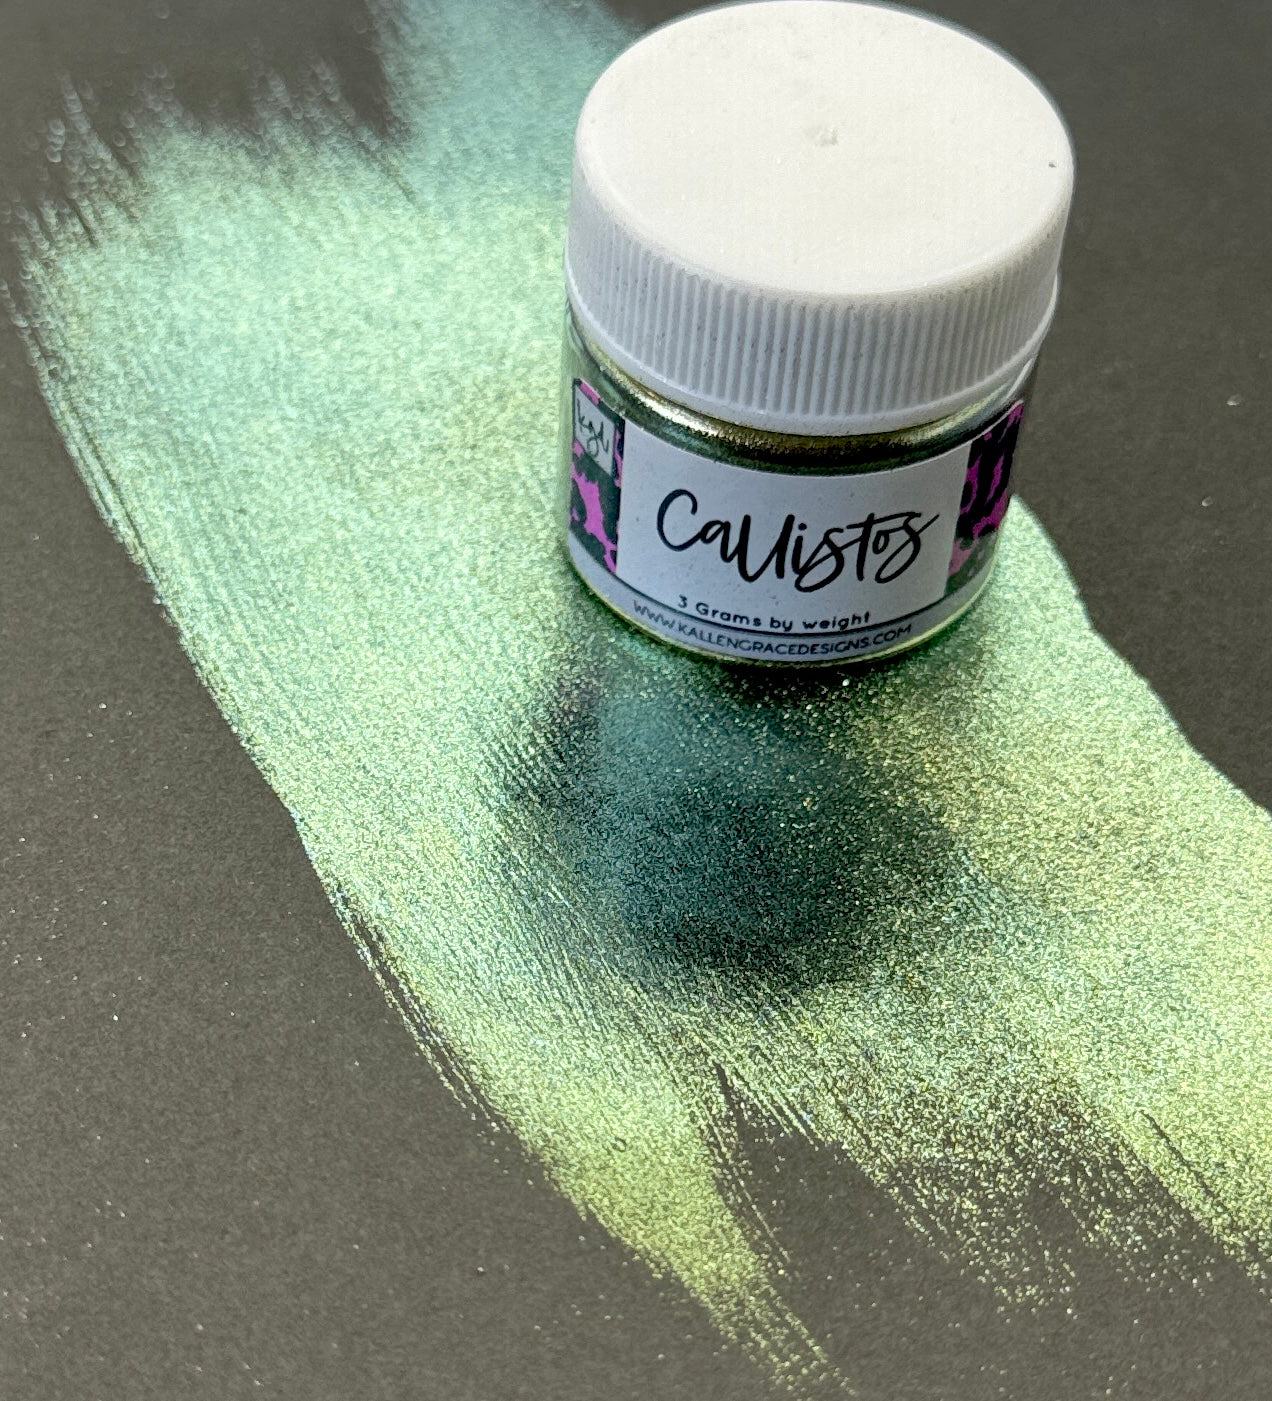 Callistos // Chameleon Pigment 3g